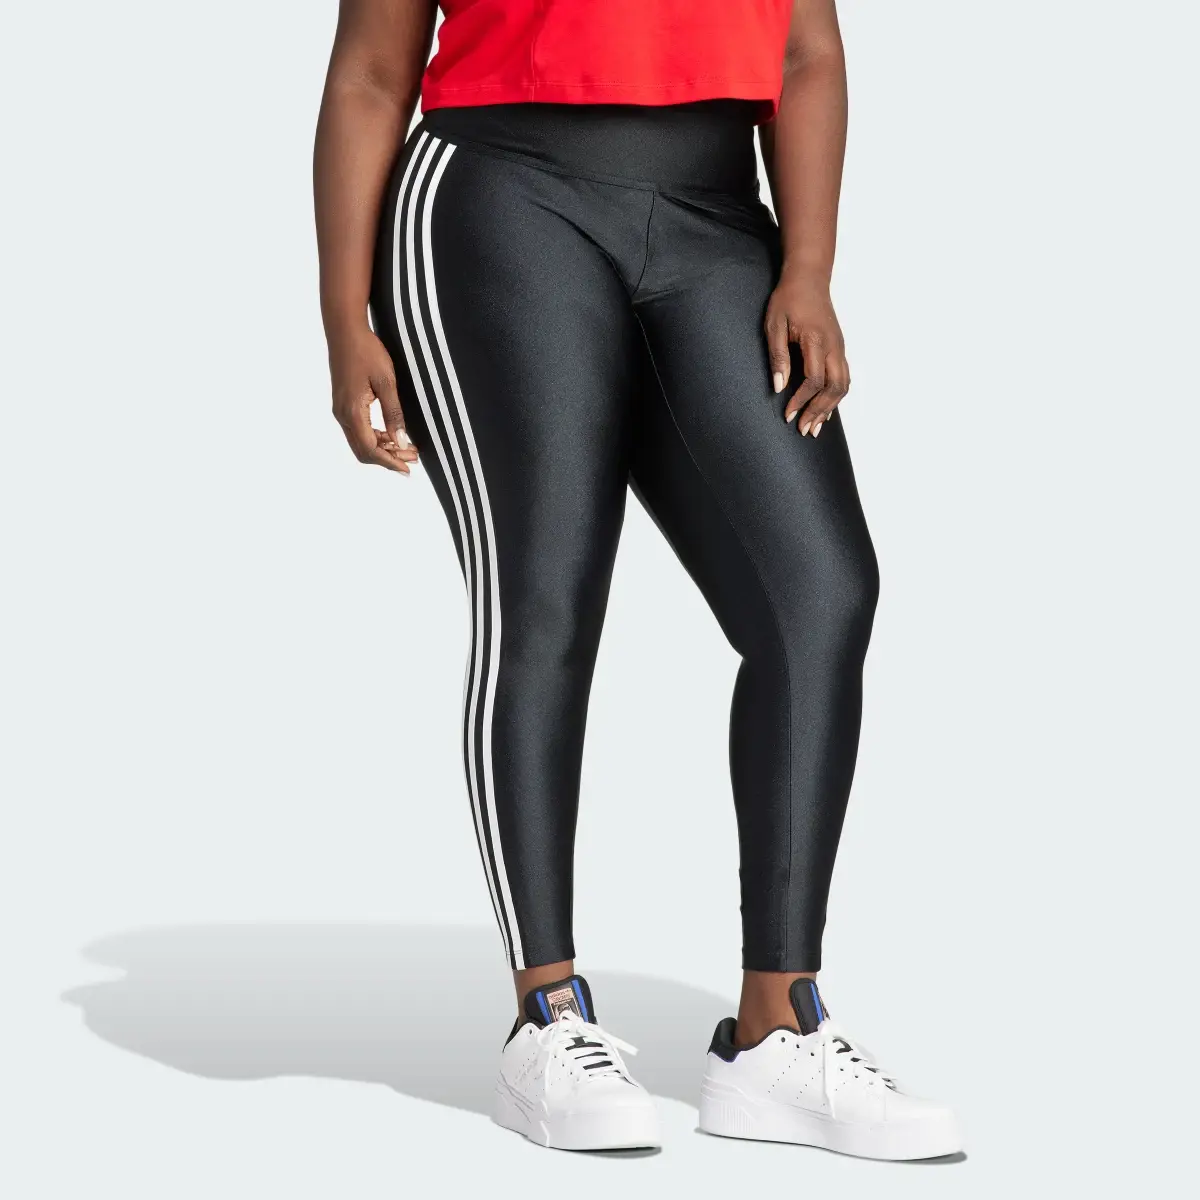 Adidas 3-Stripes Leggings (Plus Size). 3